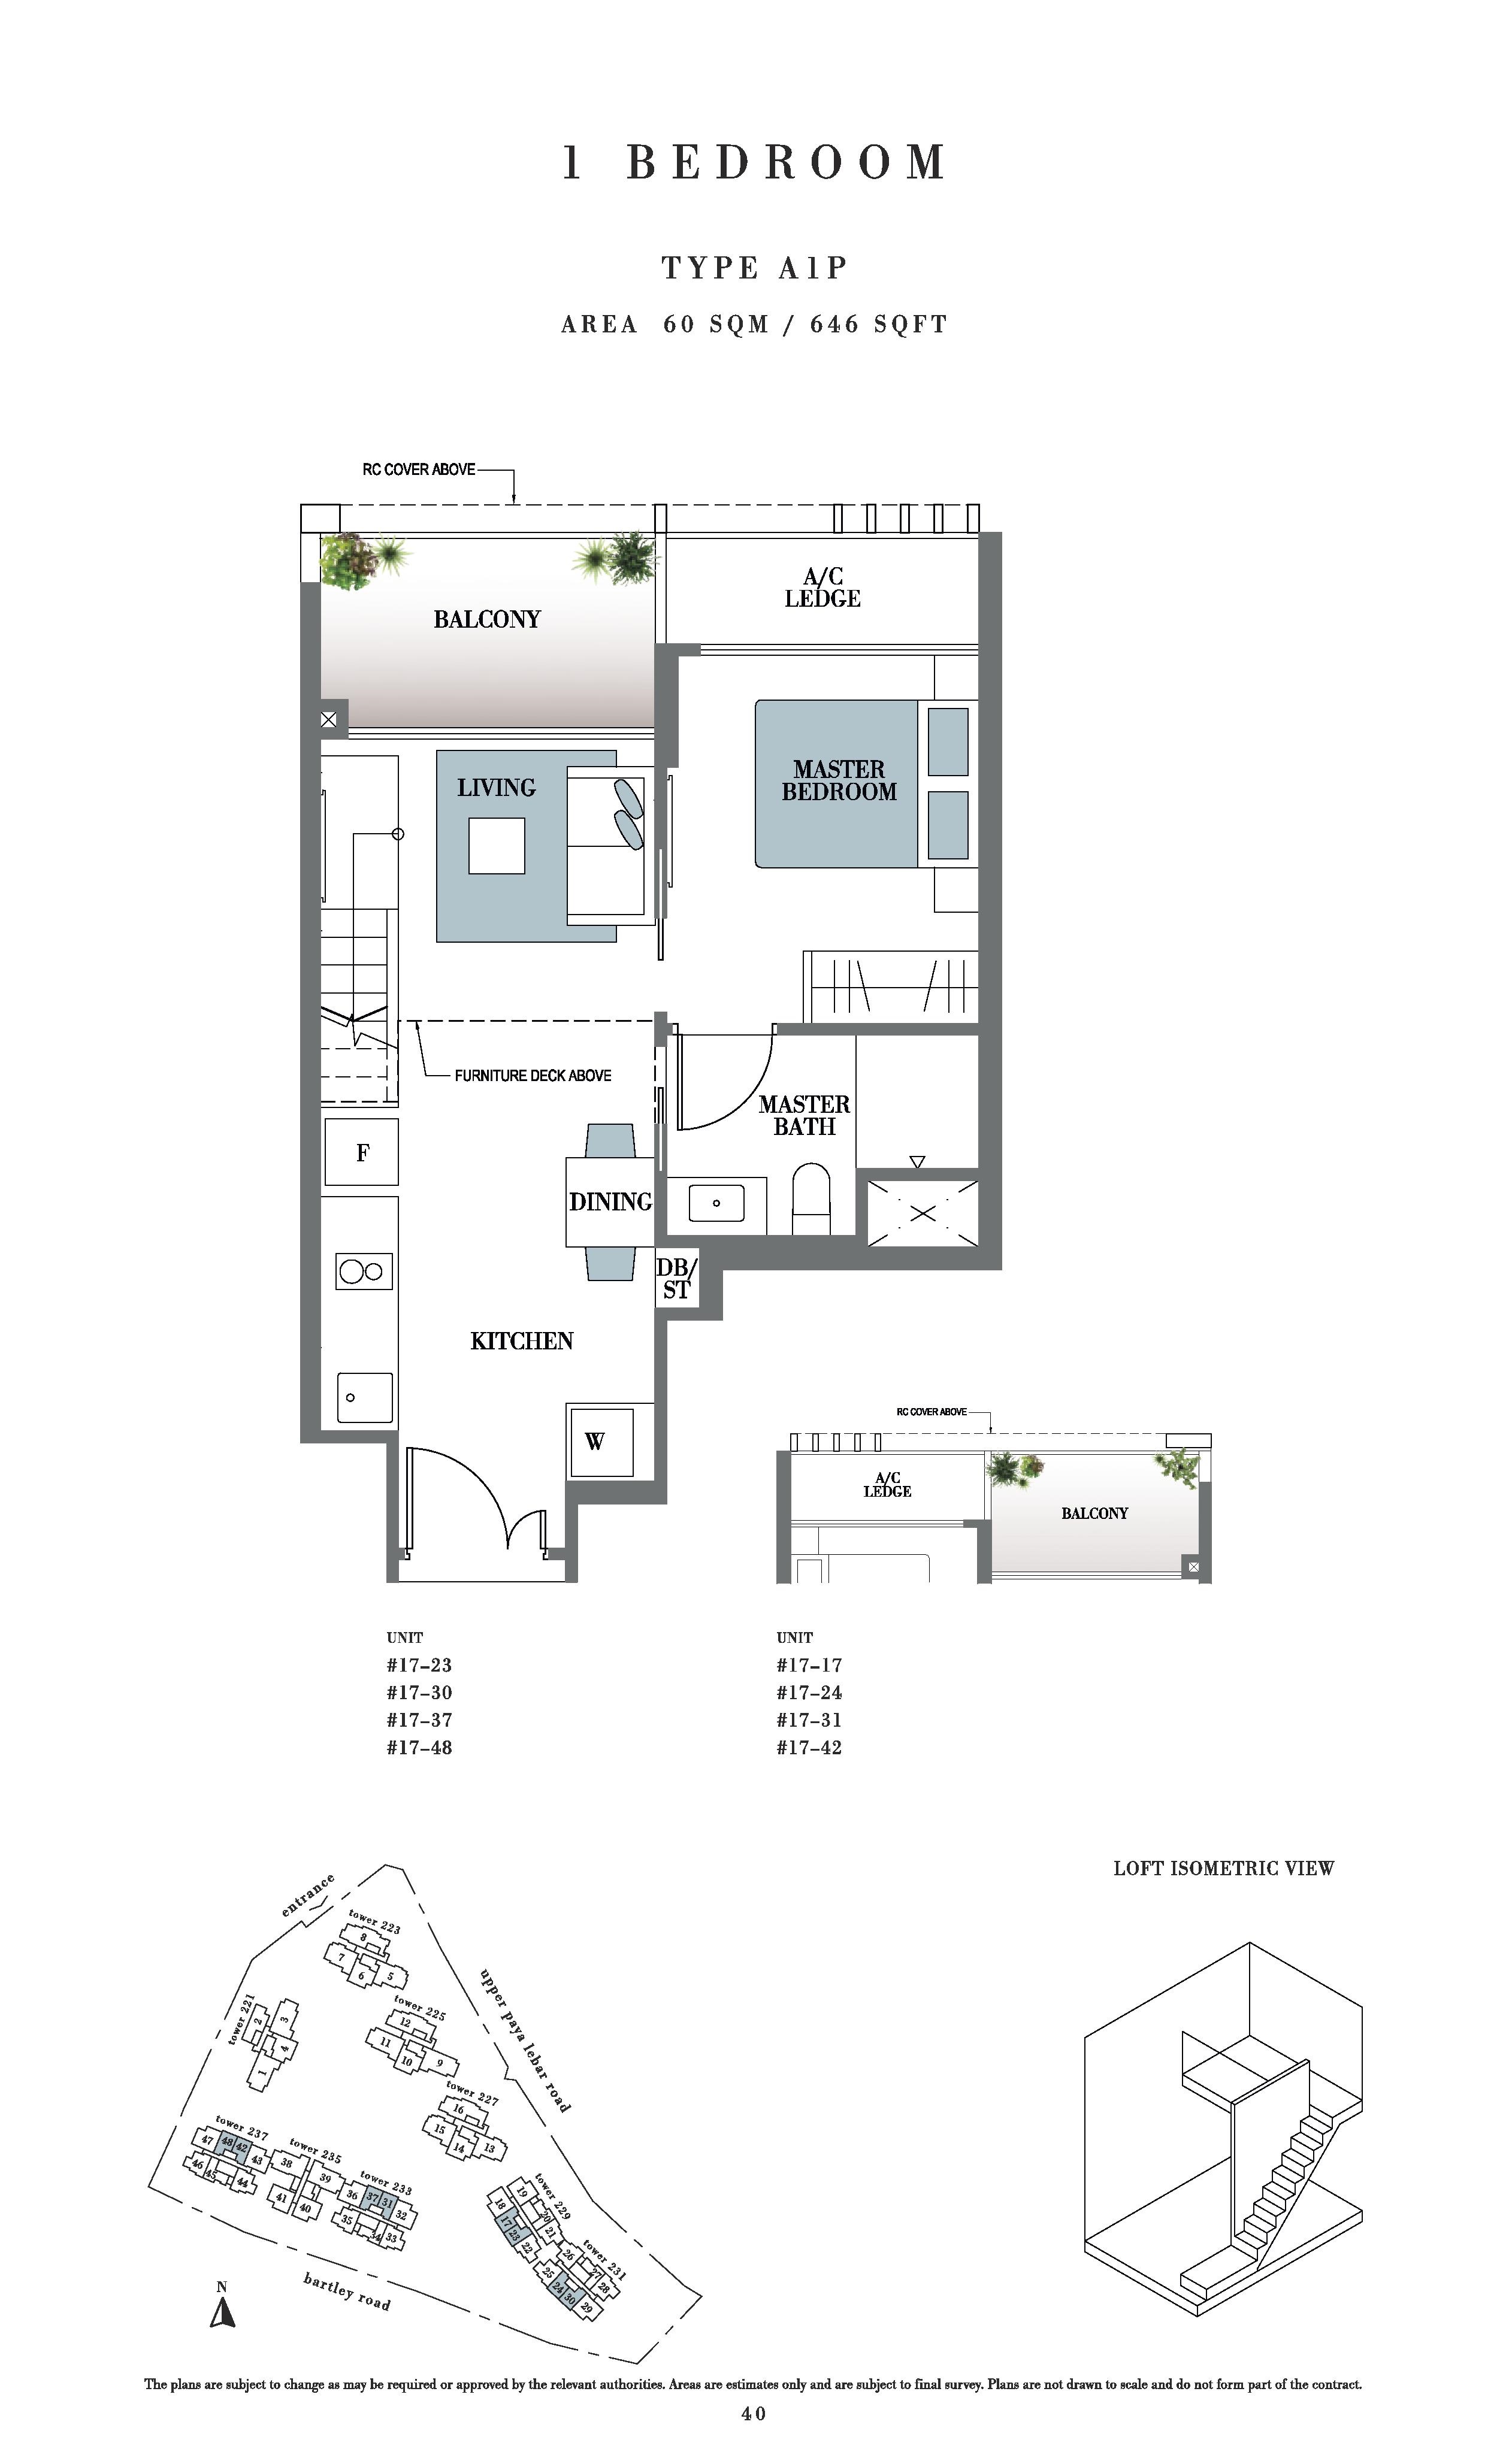 Botanique @ bartley 1 Bedroom Floor Plans Type A1P